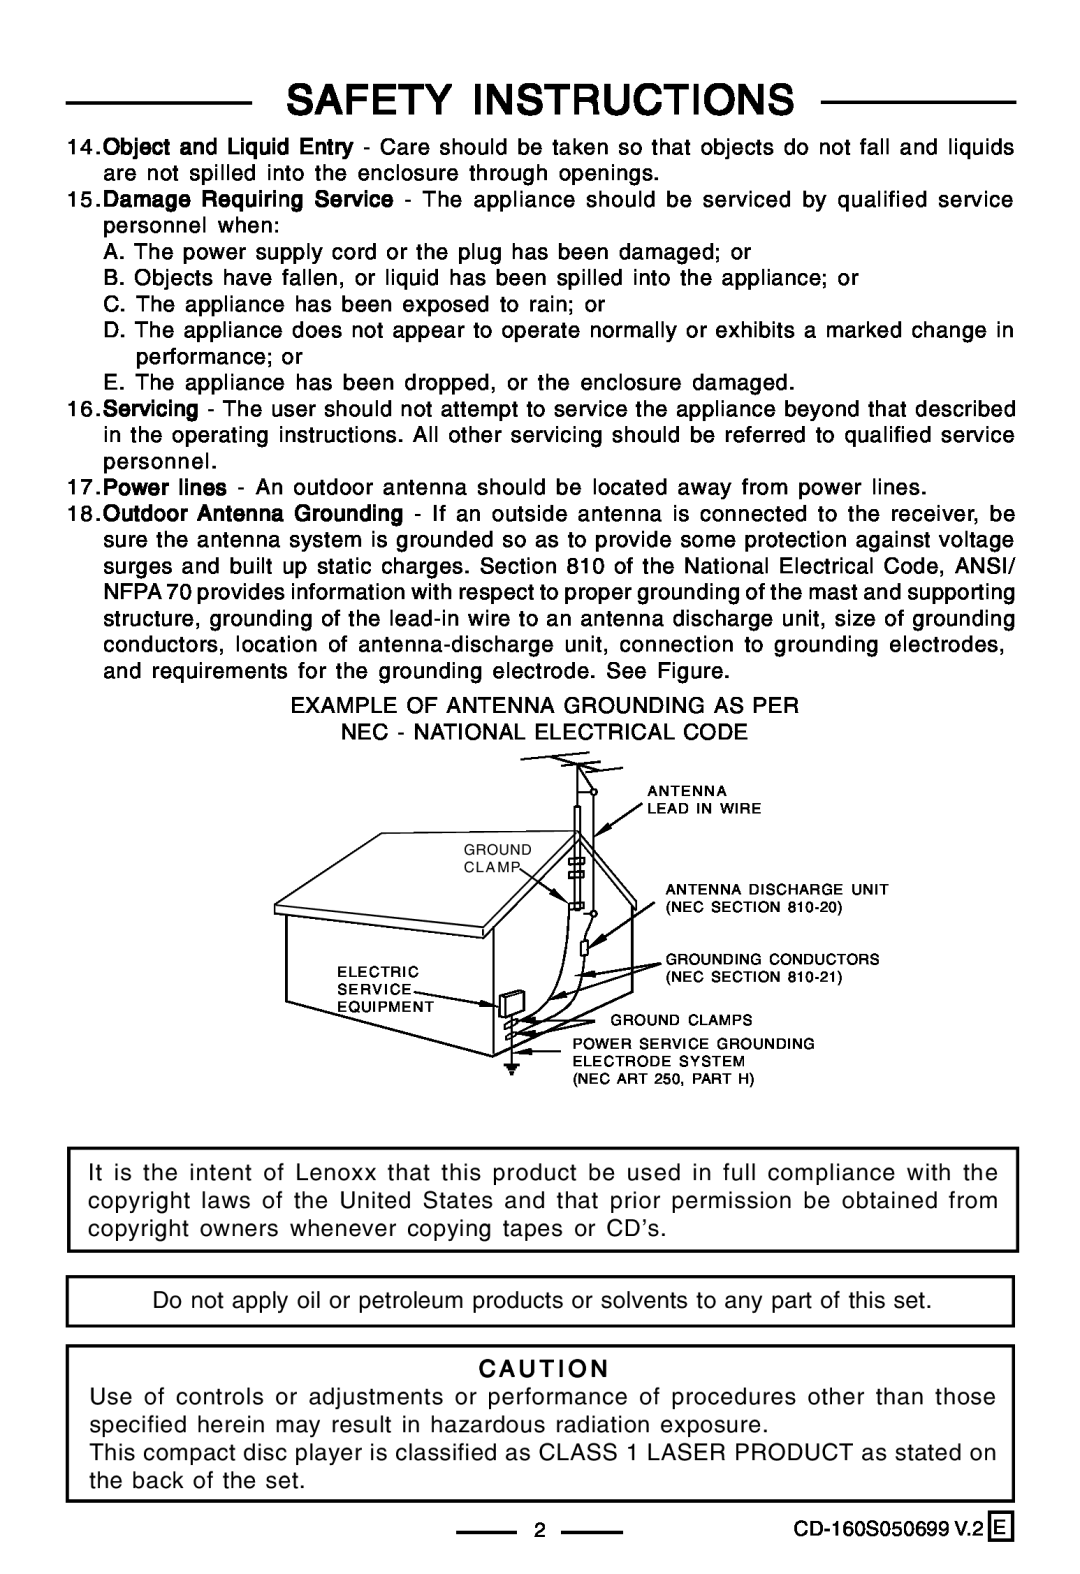 Lenoxx Electronics CD-160 manual Safety Instructions, C A U T I O N 